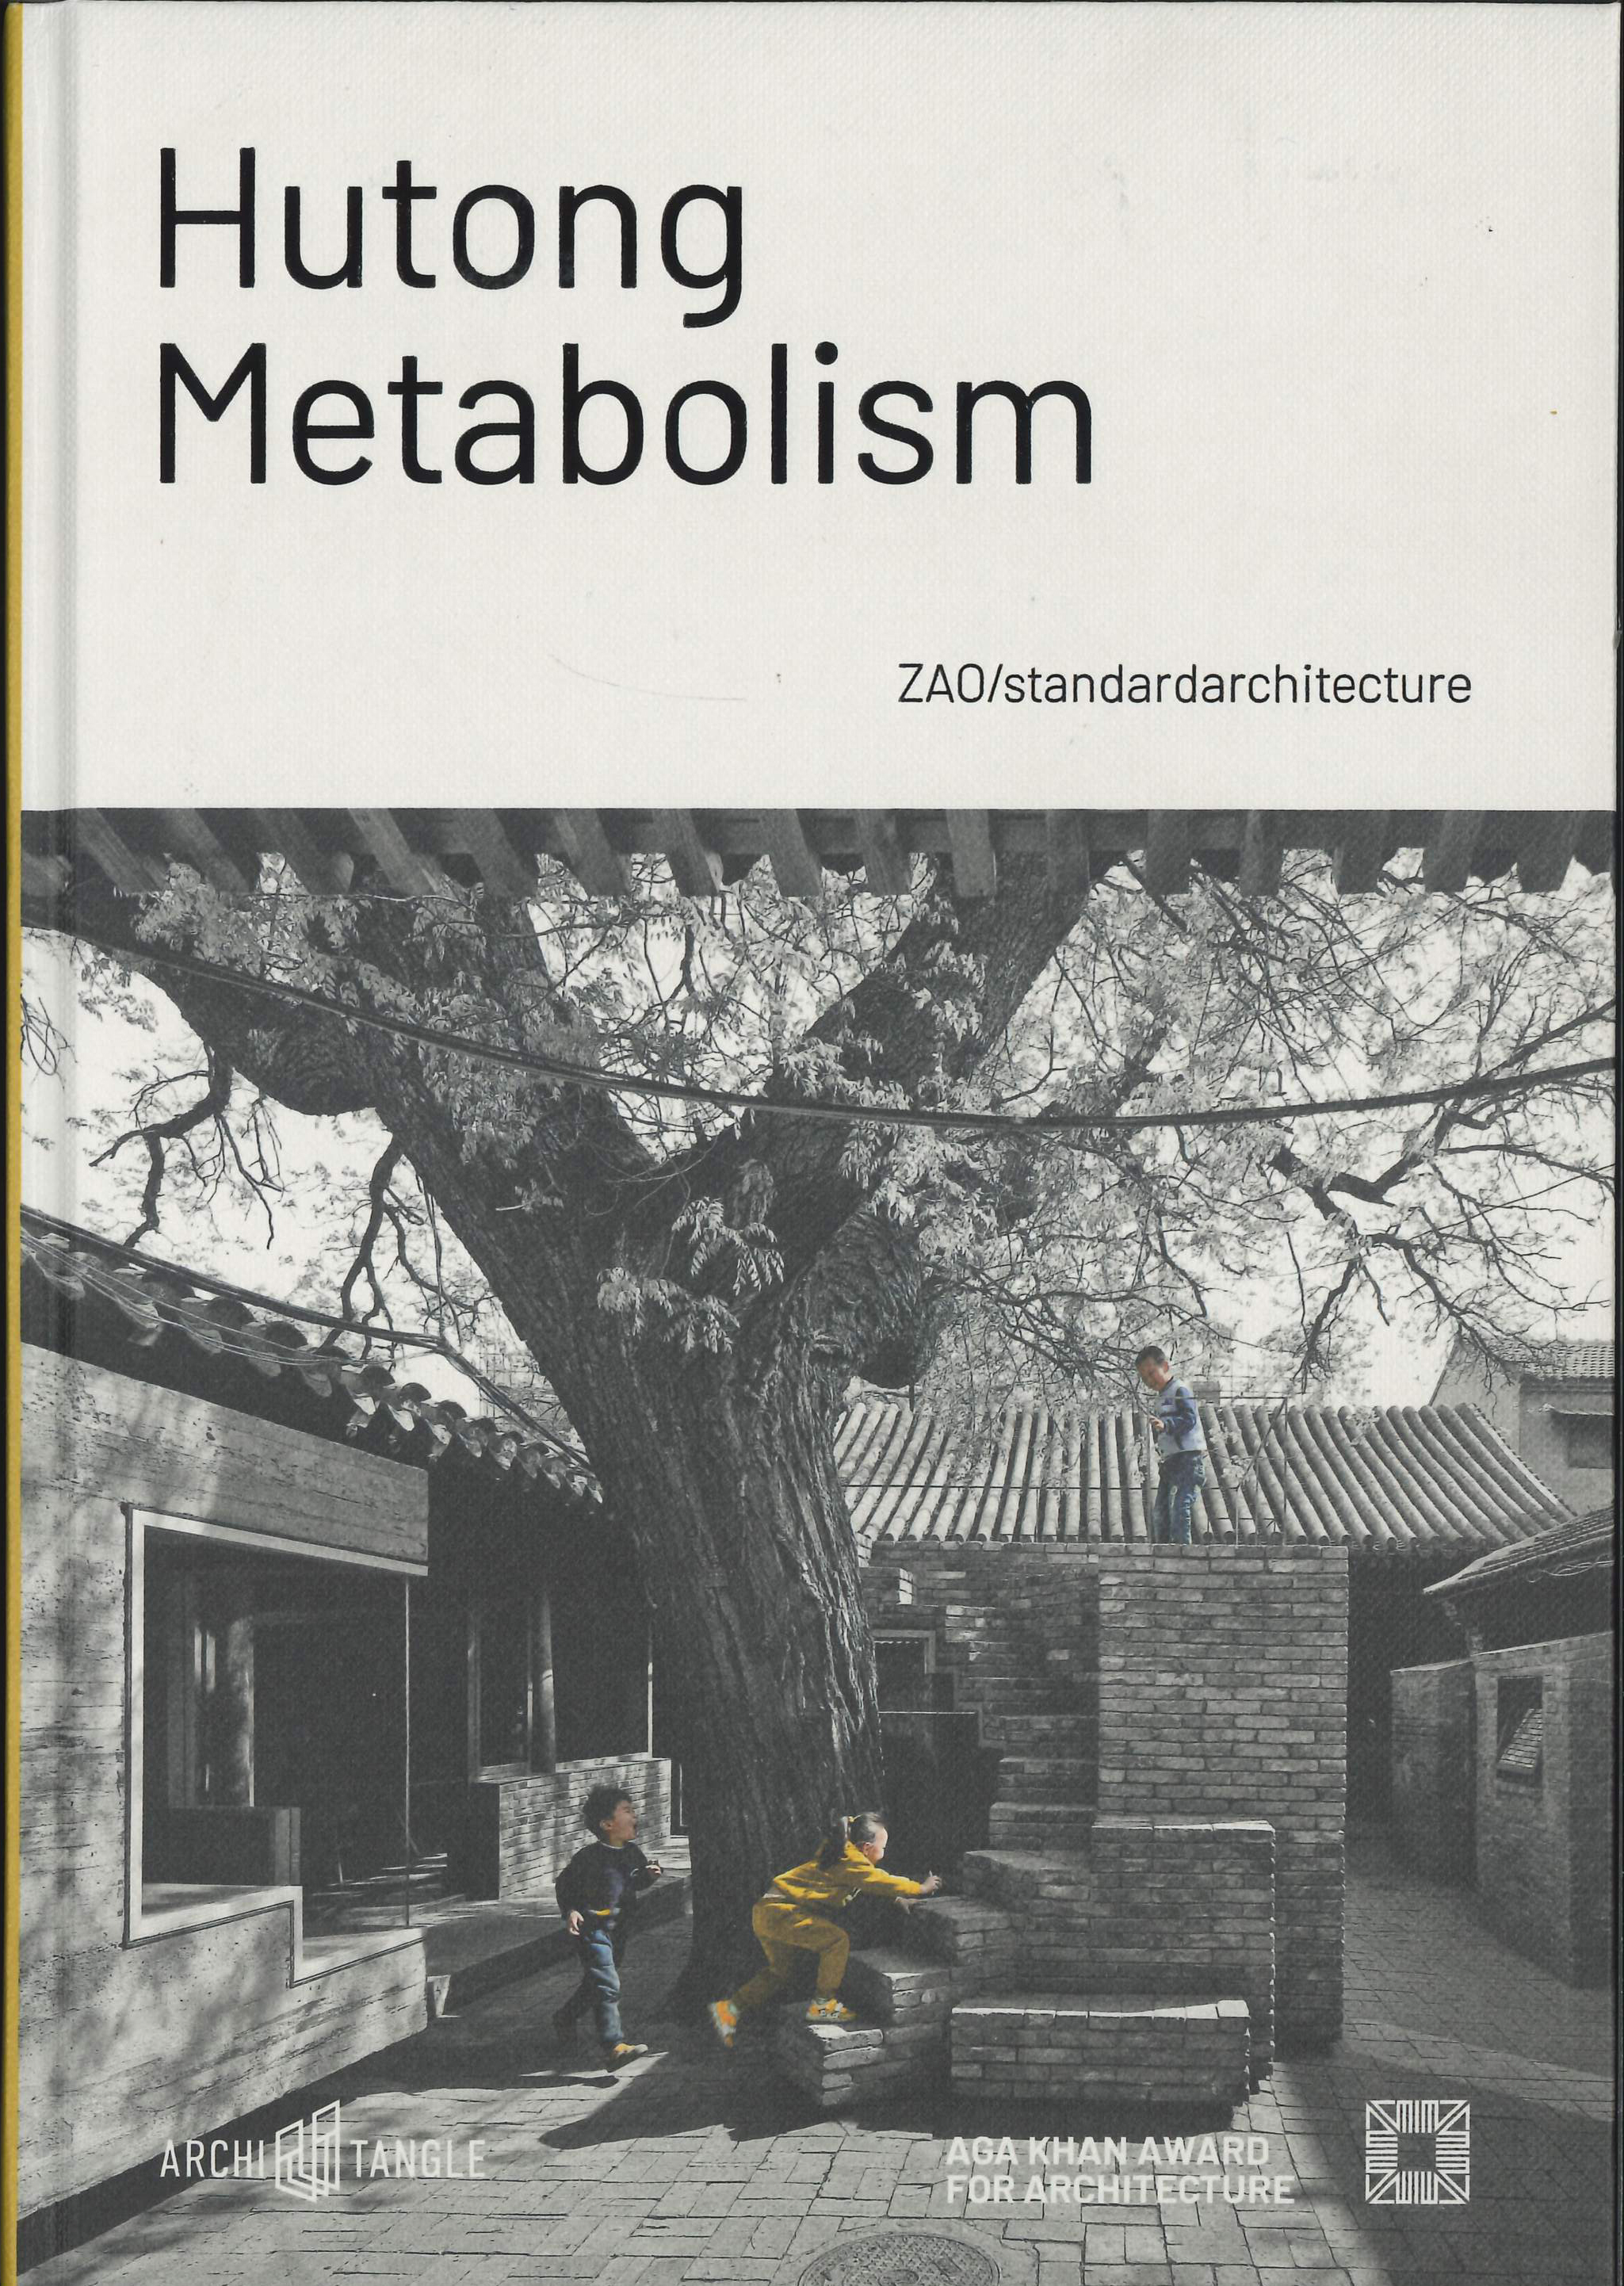 Hutong Metabolism: ZAO/standardarchitecture